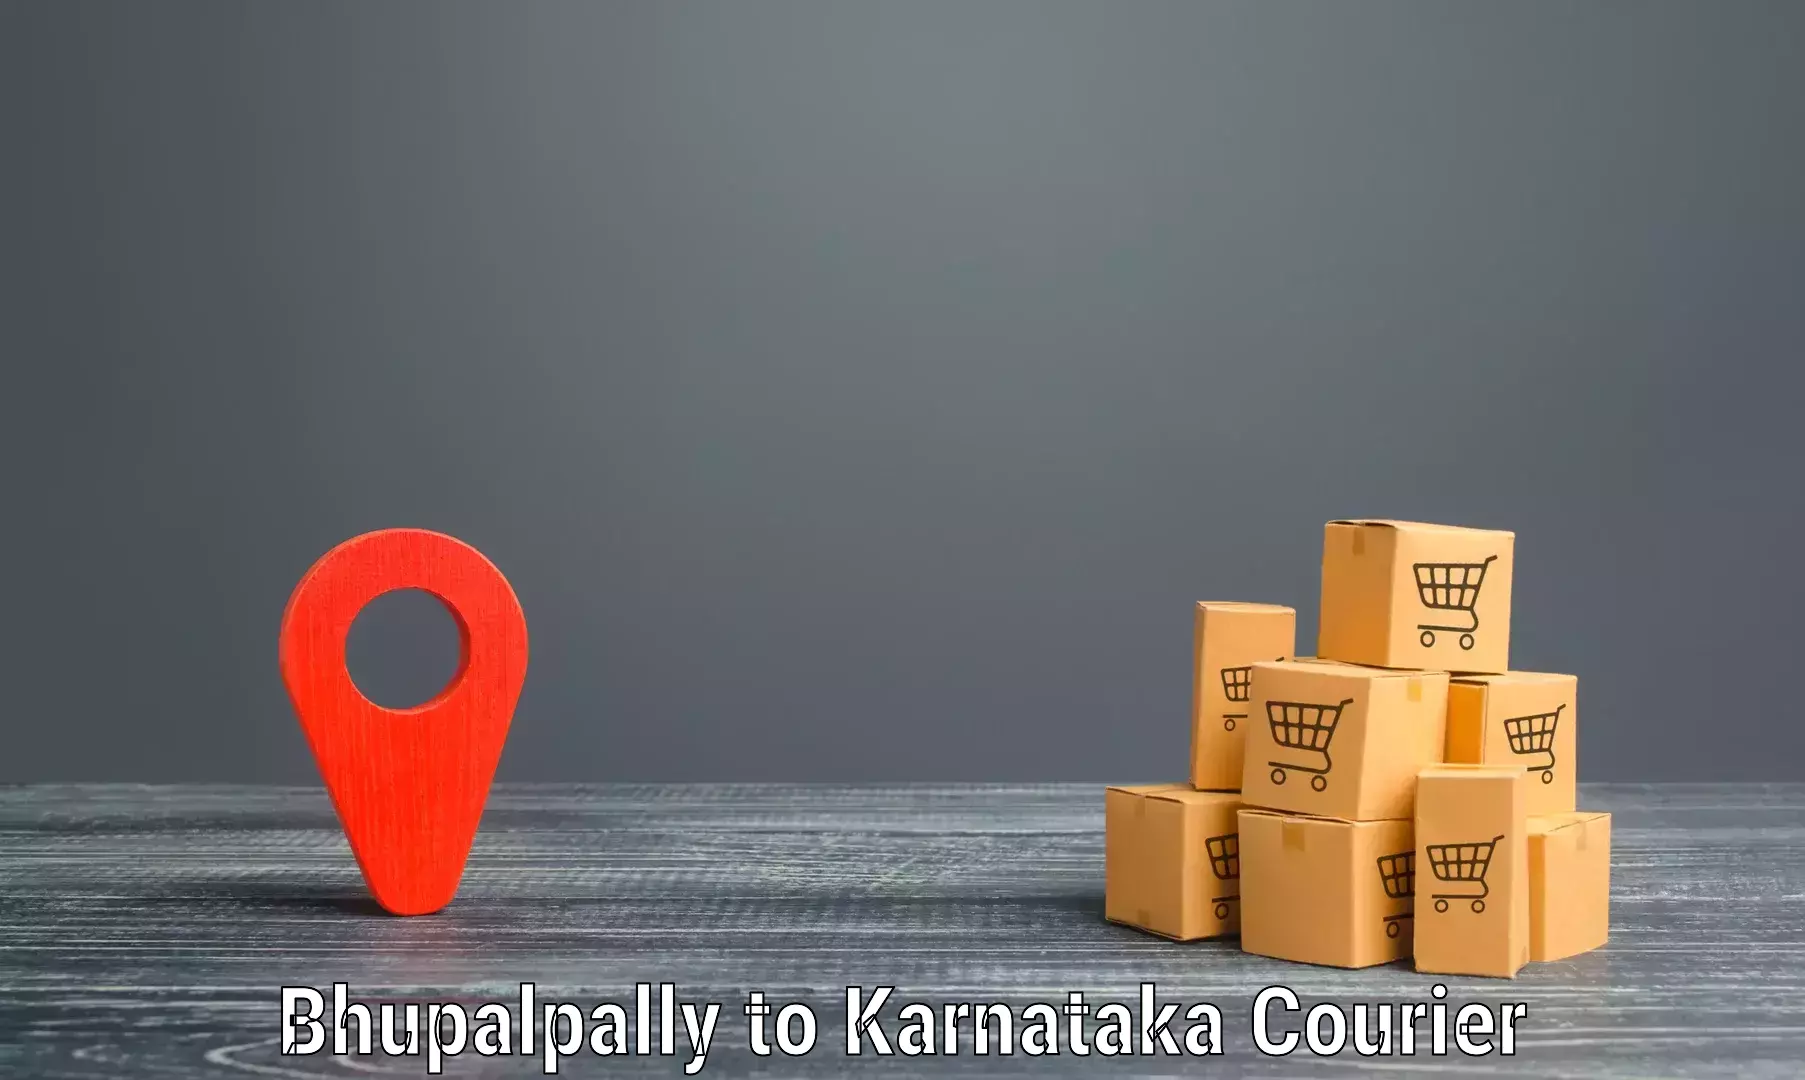 Local delivery service Bhupalpally to Kanjarakatte